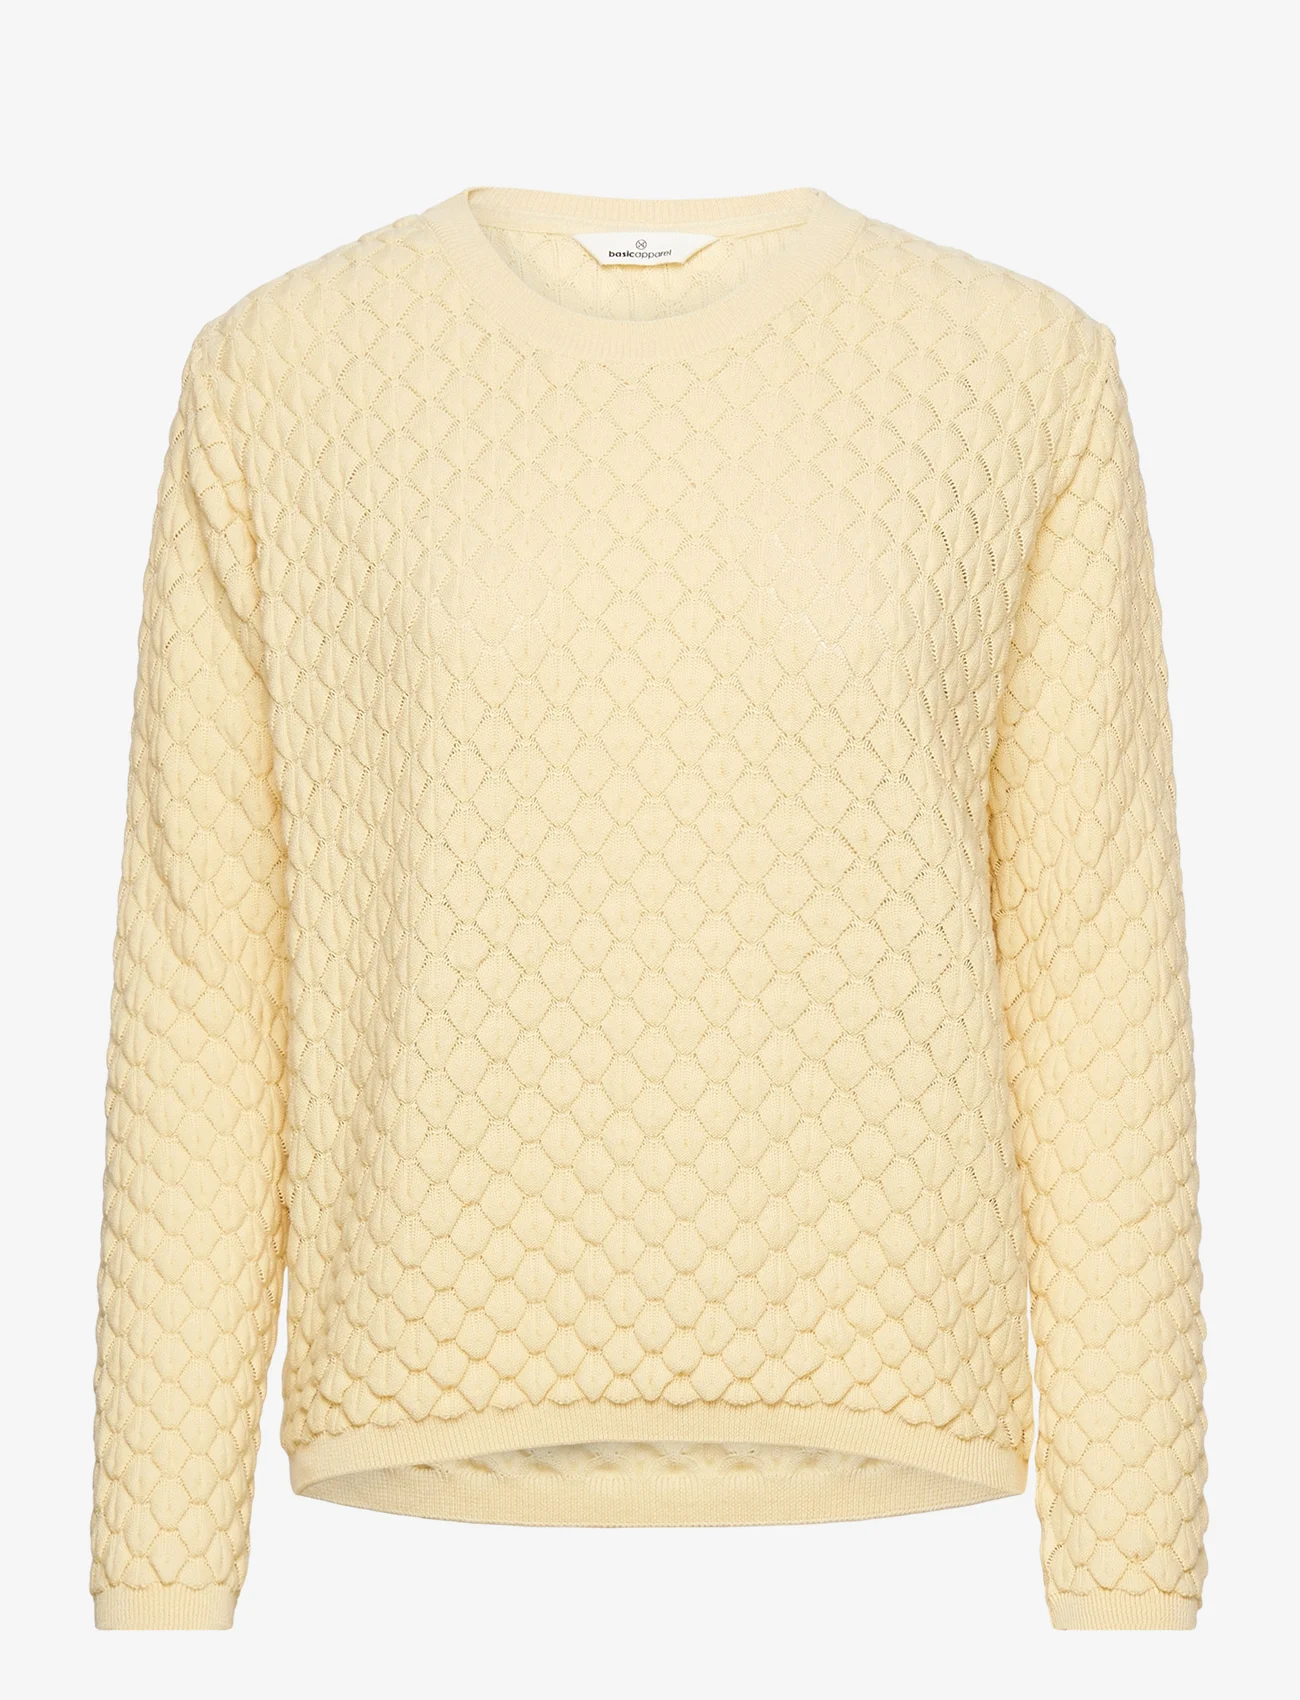 Basic Apparel - Camilla Sweater - swetry - straw - 0